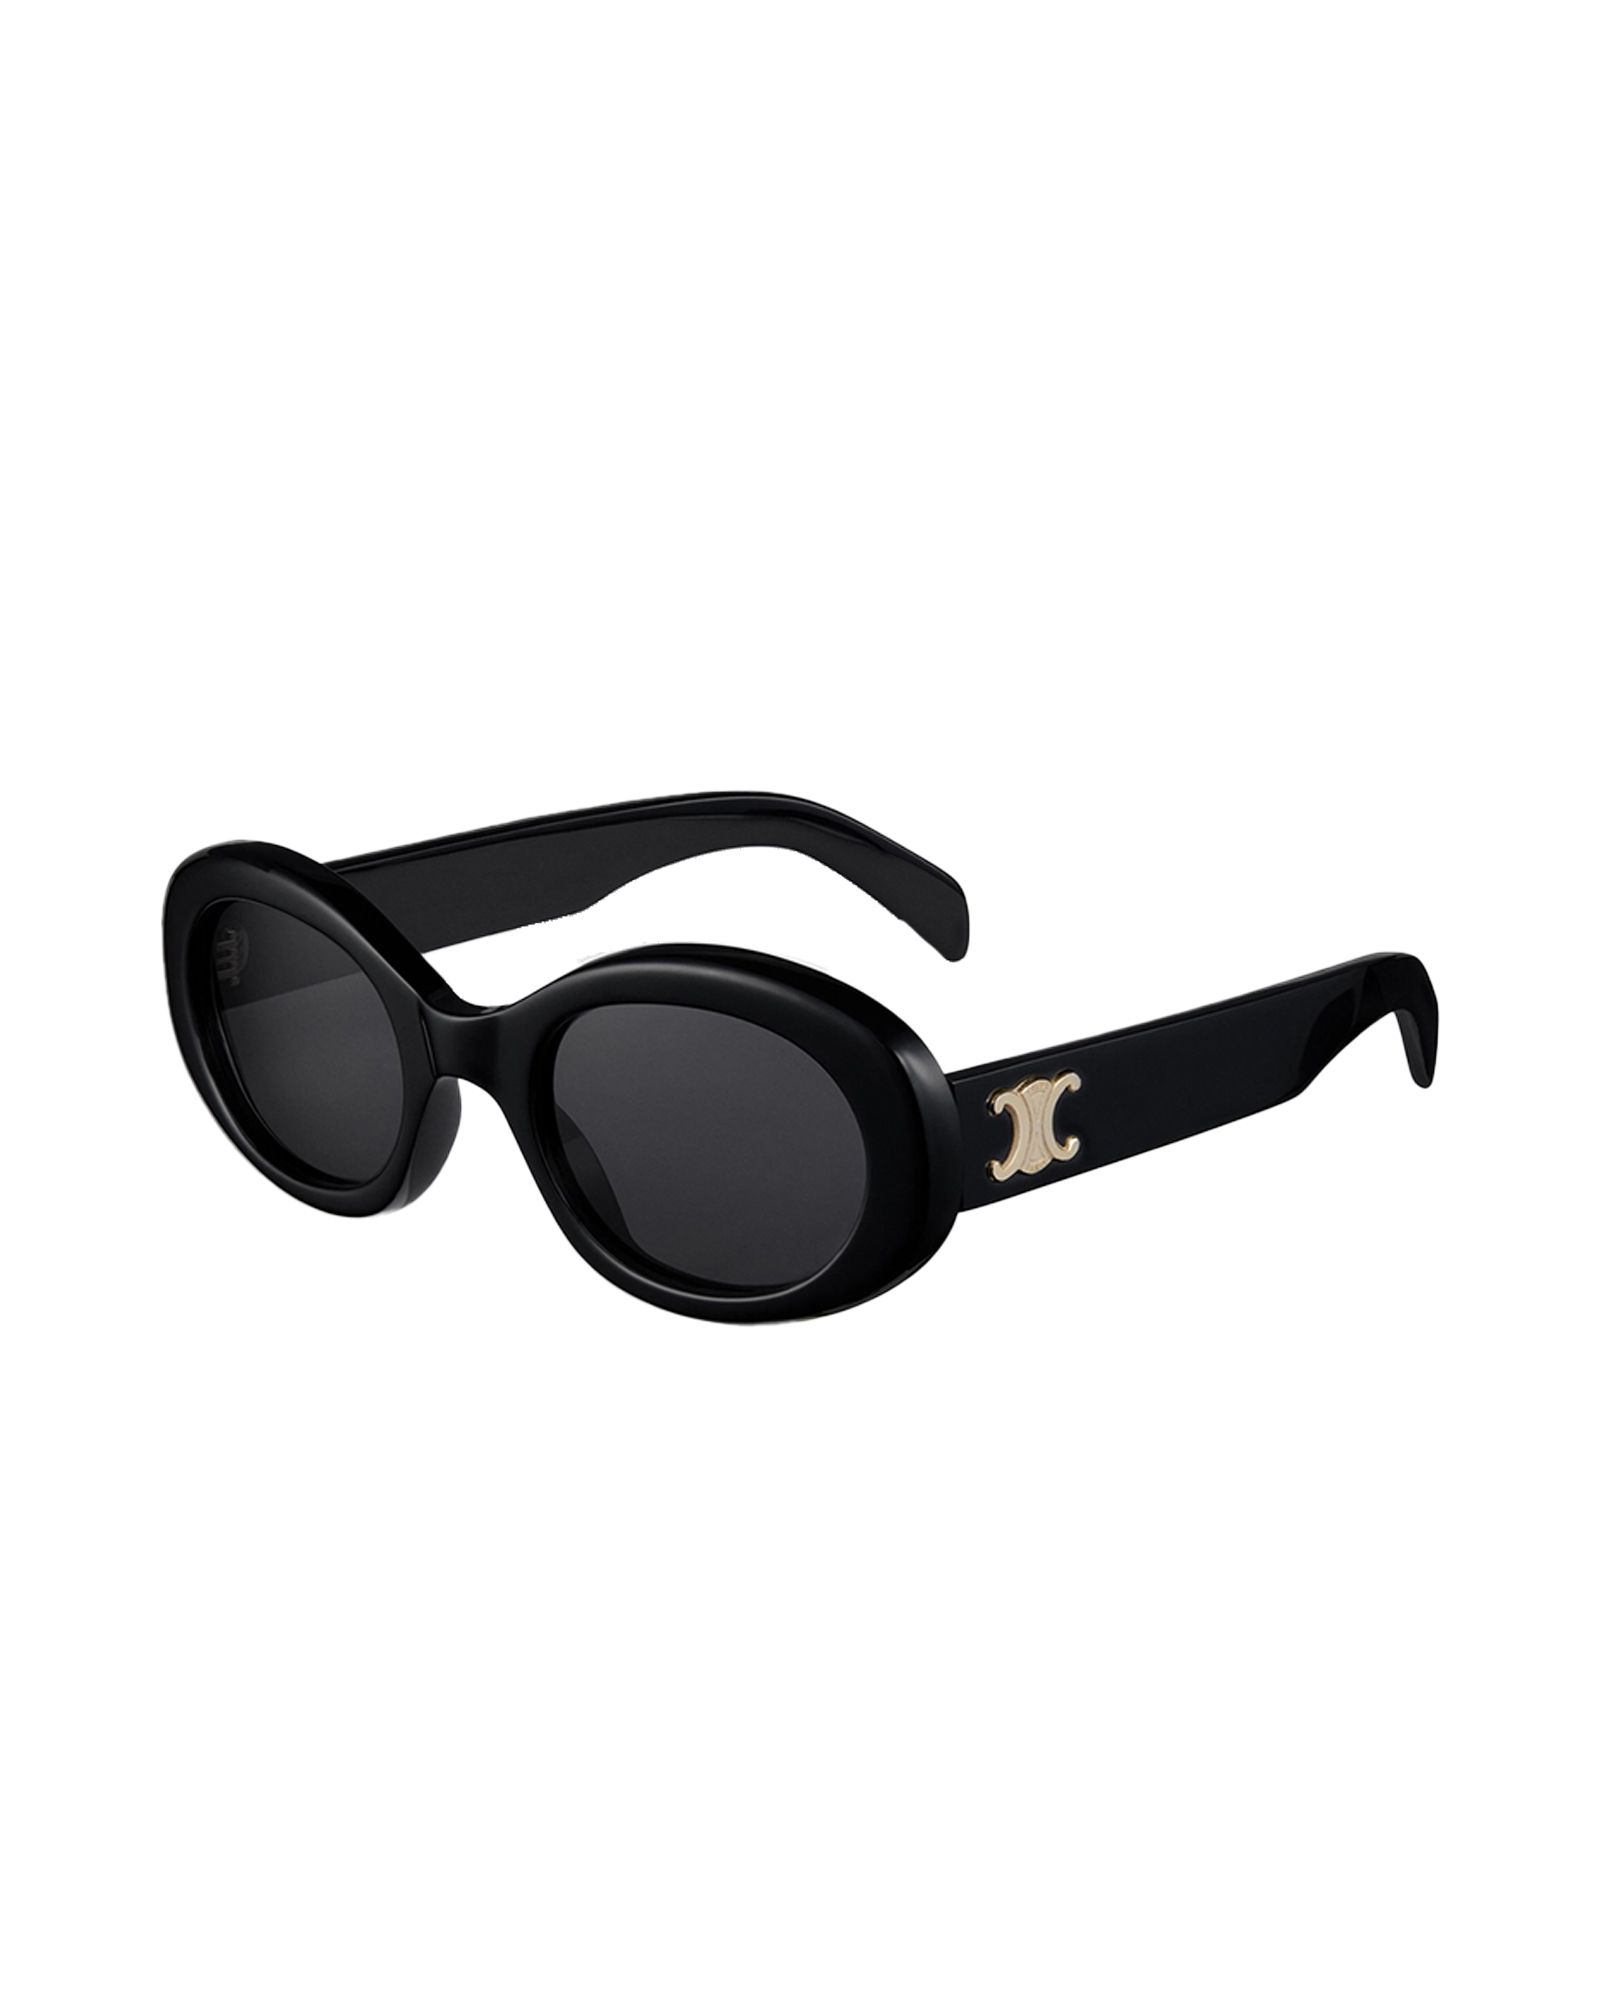 CELINE -EYEWEAR- - セリーヌ/CELINE Sunglasses/サングラス/BLACK 